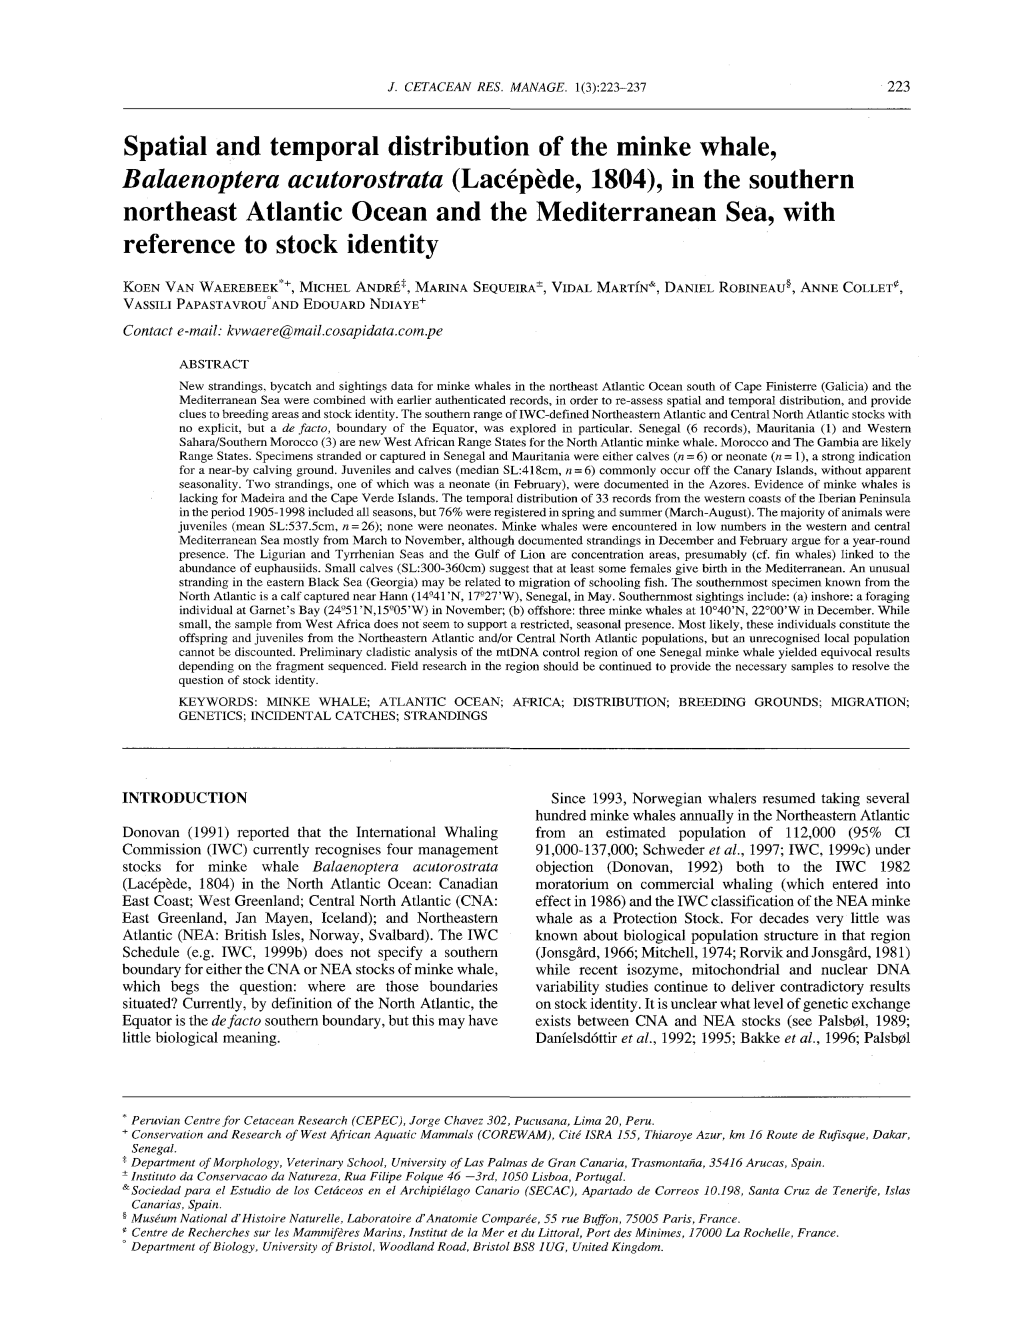 Spatial and Temporal Distribution of the Minke Whale, Balaenoptera Acutorostrata